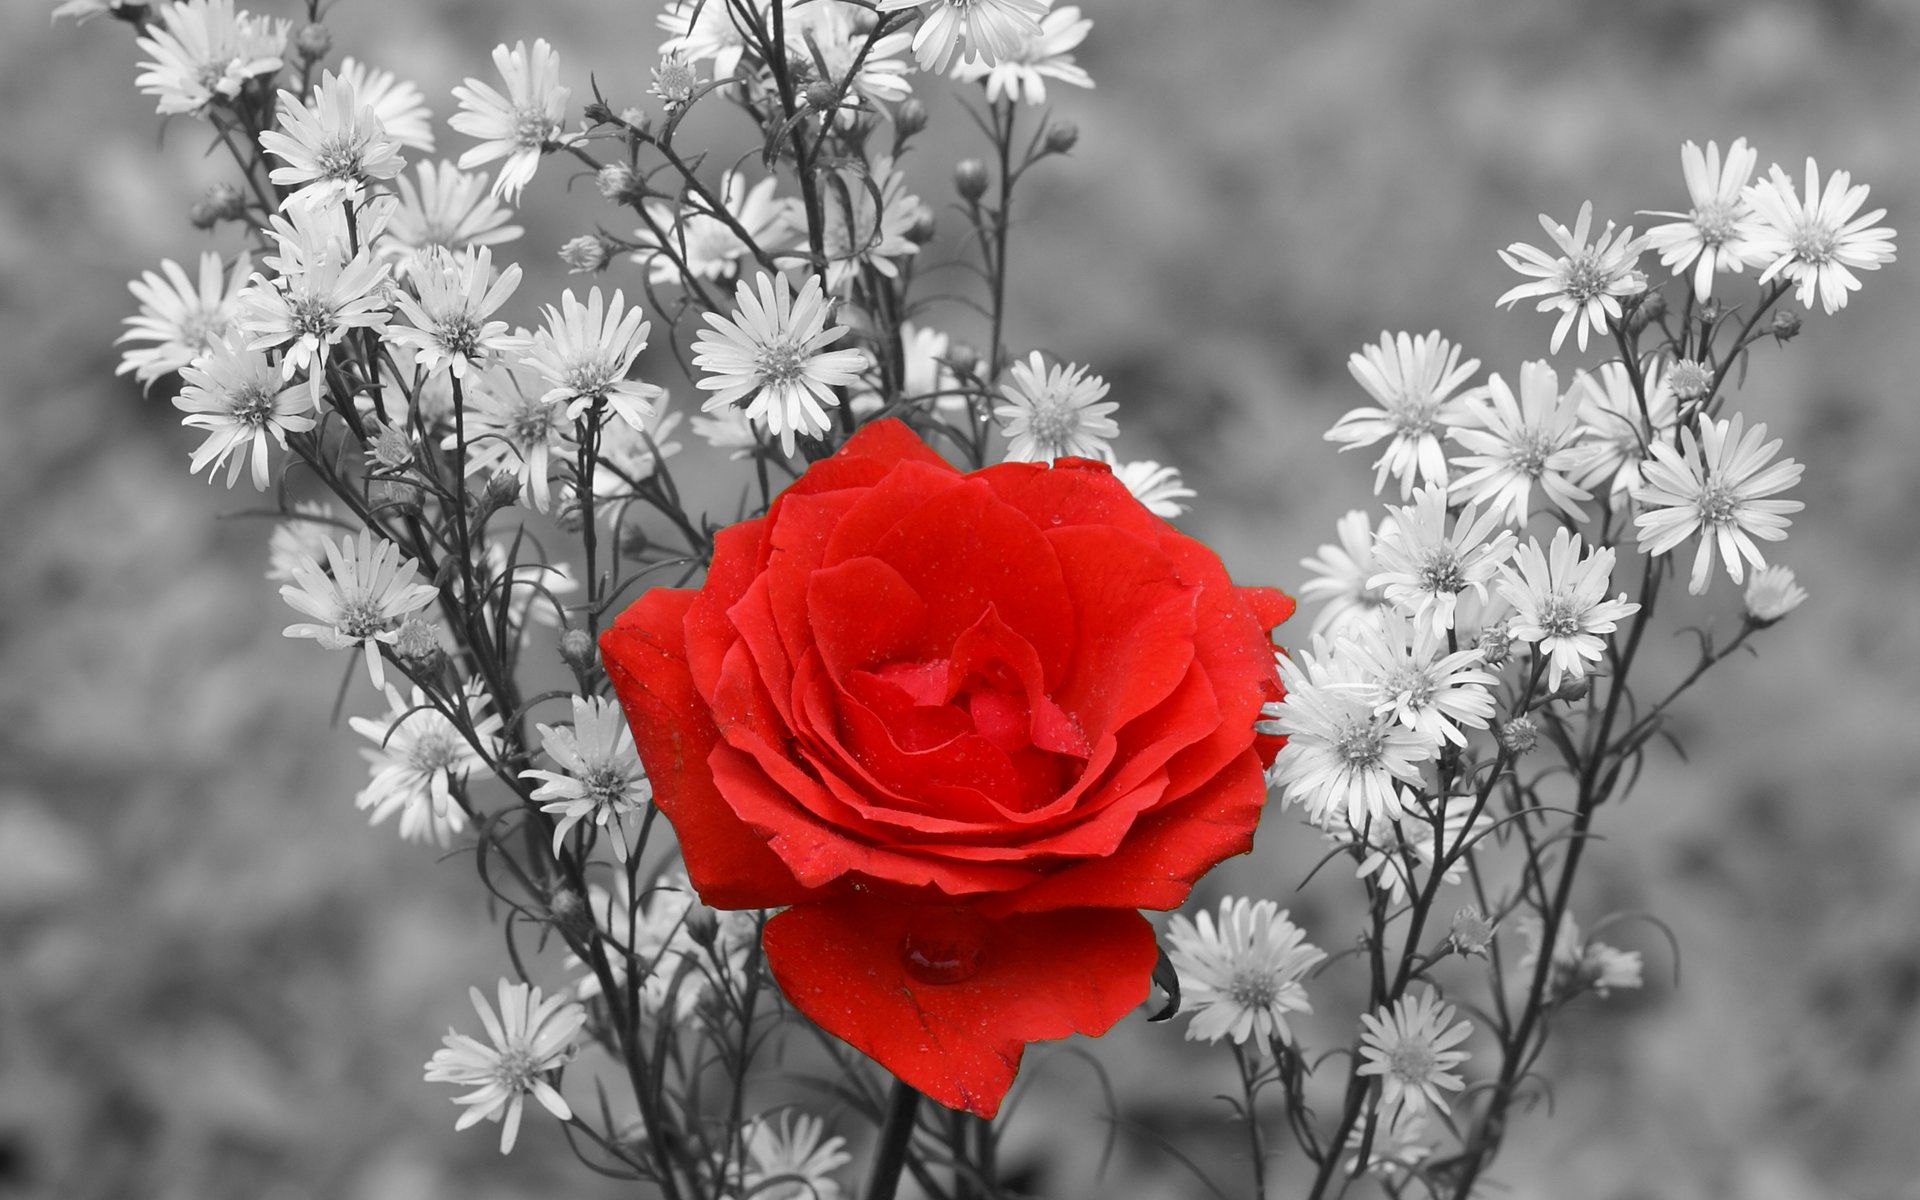 161284 Salvapantallas y fondos de pantalla Rosa en tu teléfono. Descarga imágenes de flores, tierra/naturaleza, naturaleza, color selectivo gratis